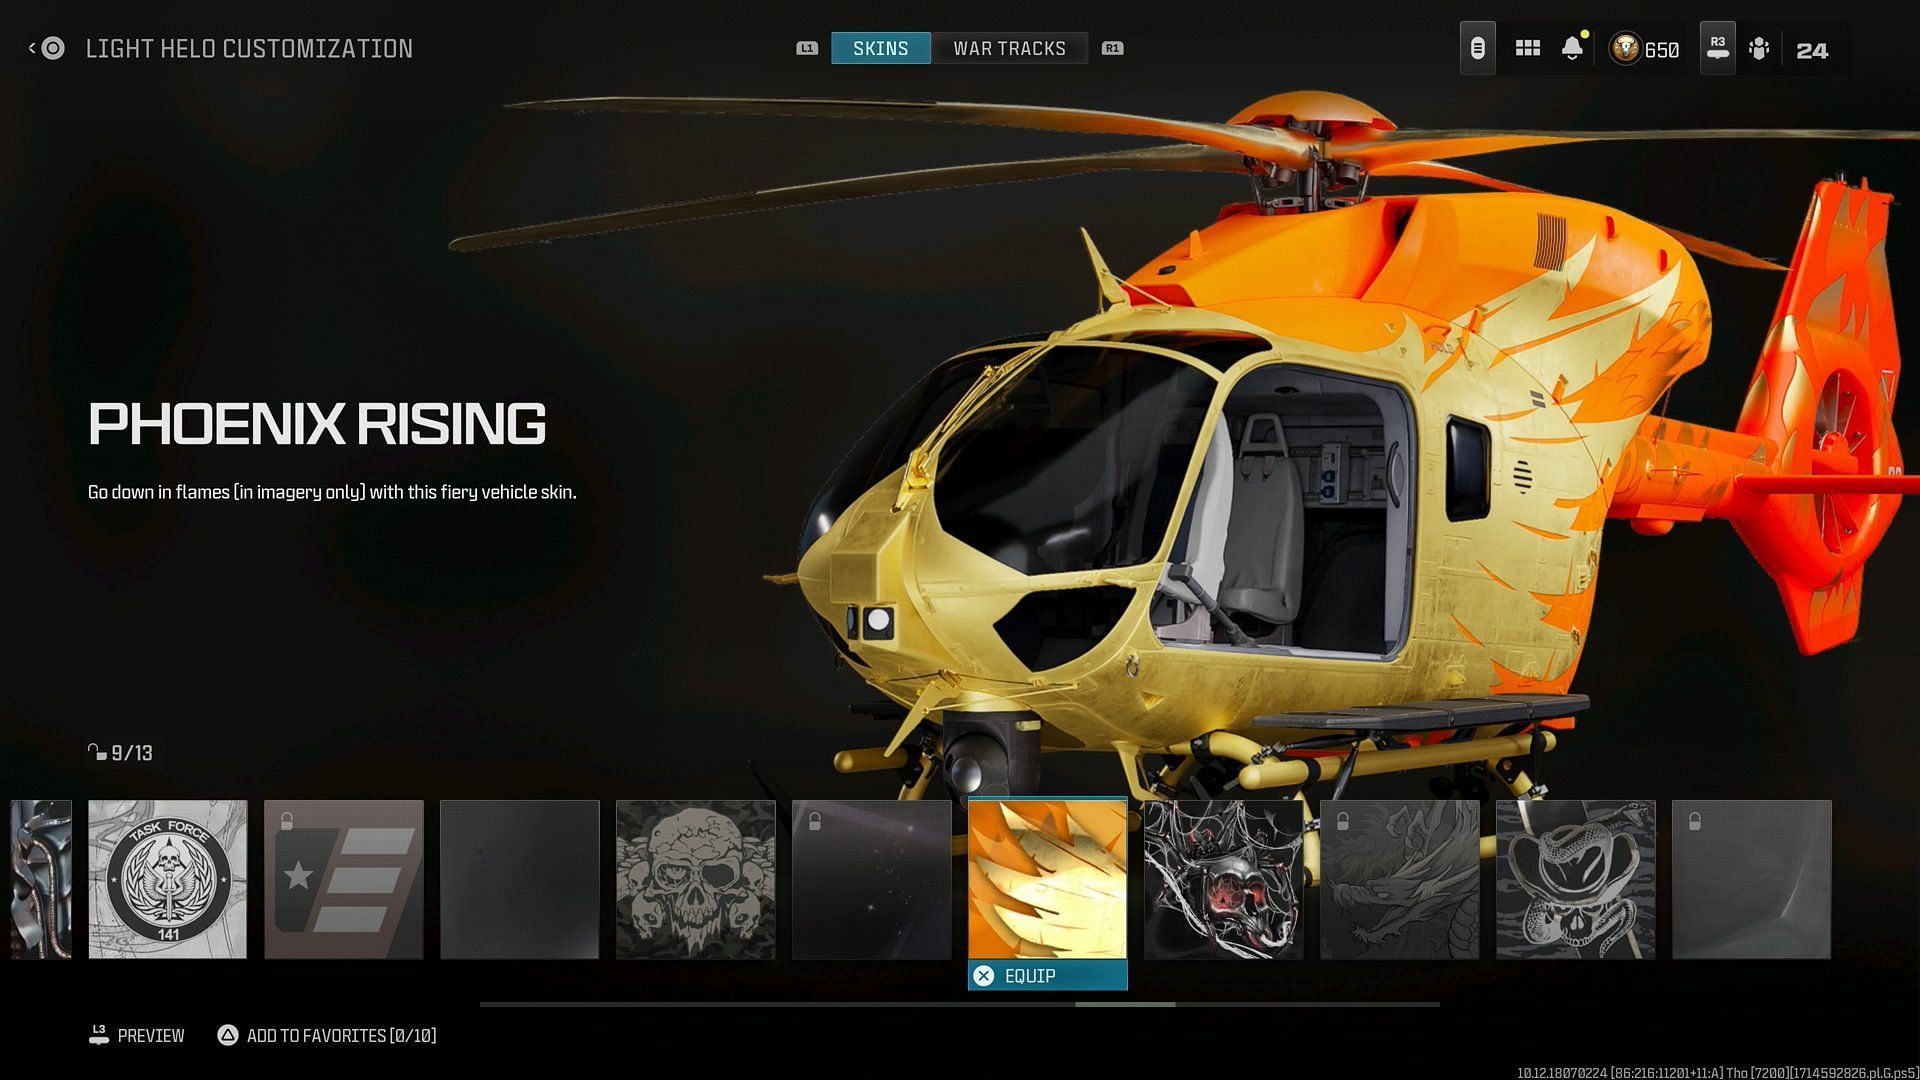 Phoenix Rising Heli skin in Warzone (Image via Activision)